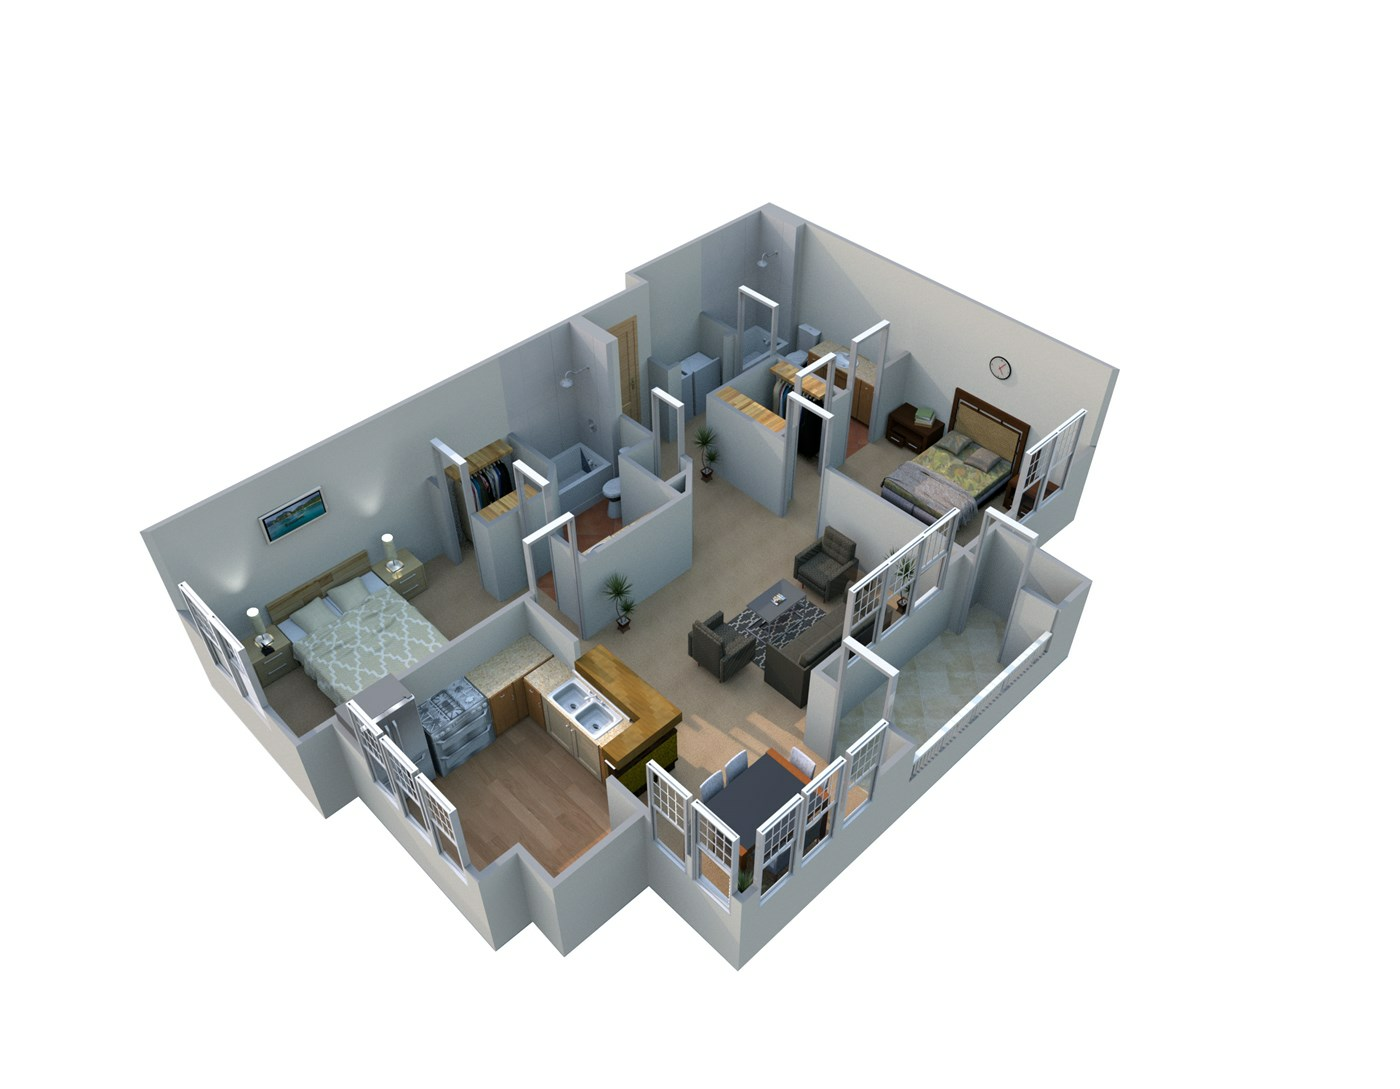 Wimberly 2x2 Sycamore Floorplans.jpg